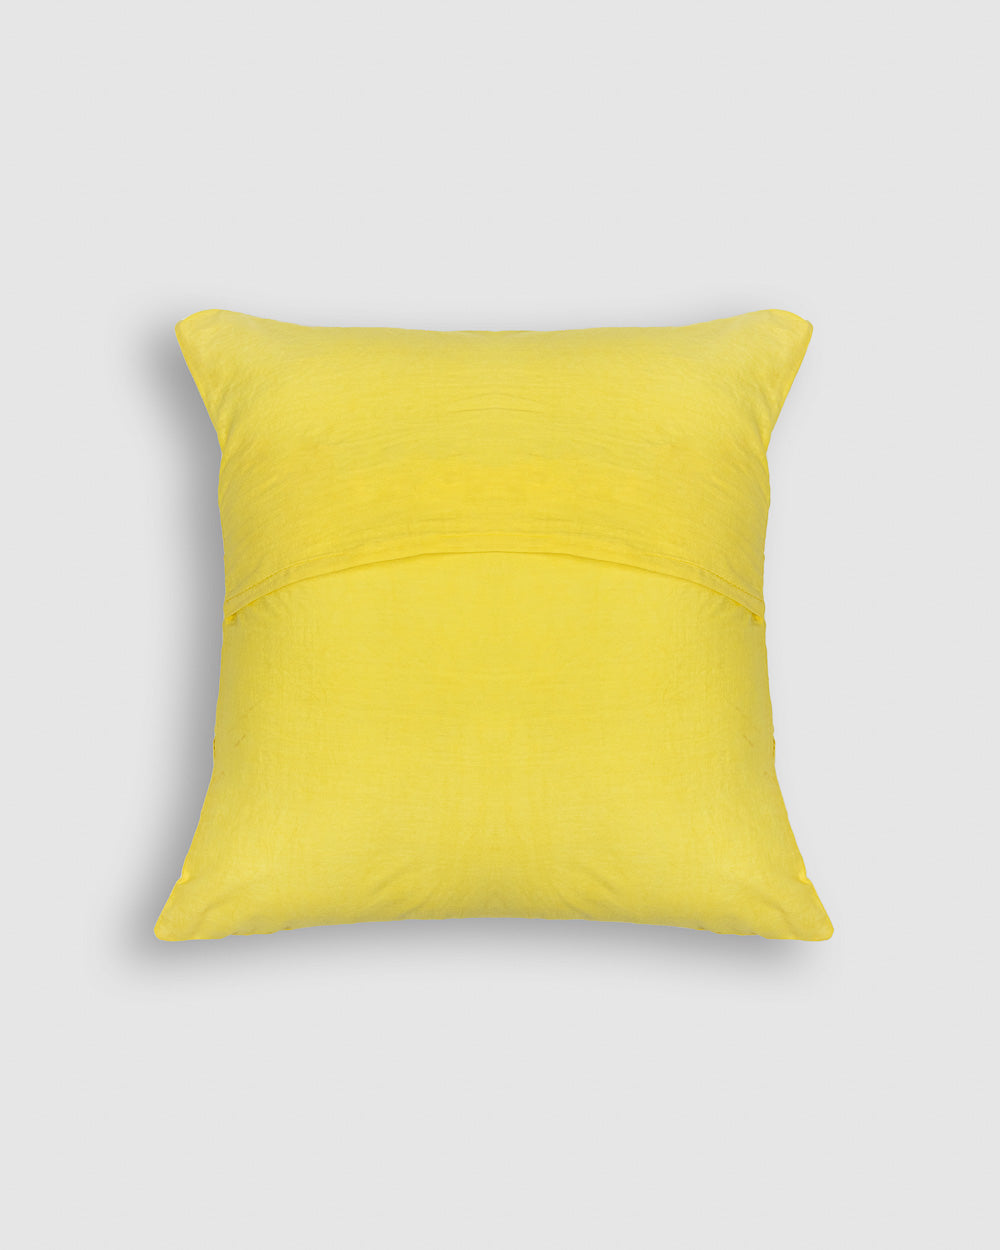 Cushion Cover Applique Kidd Design, Yellow